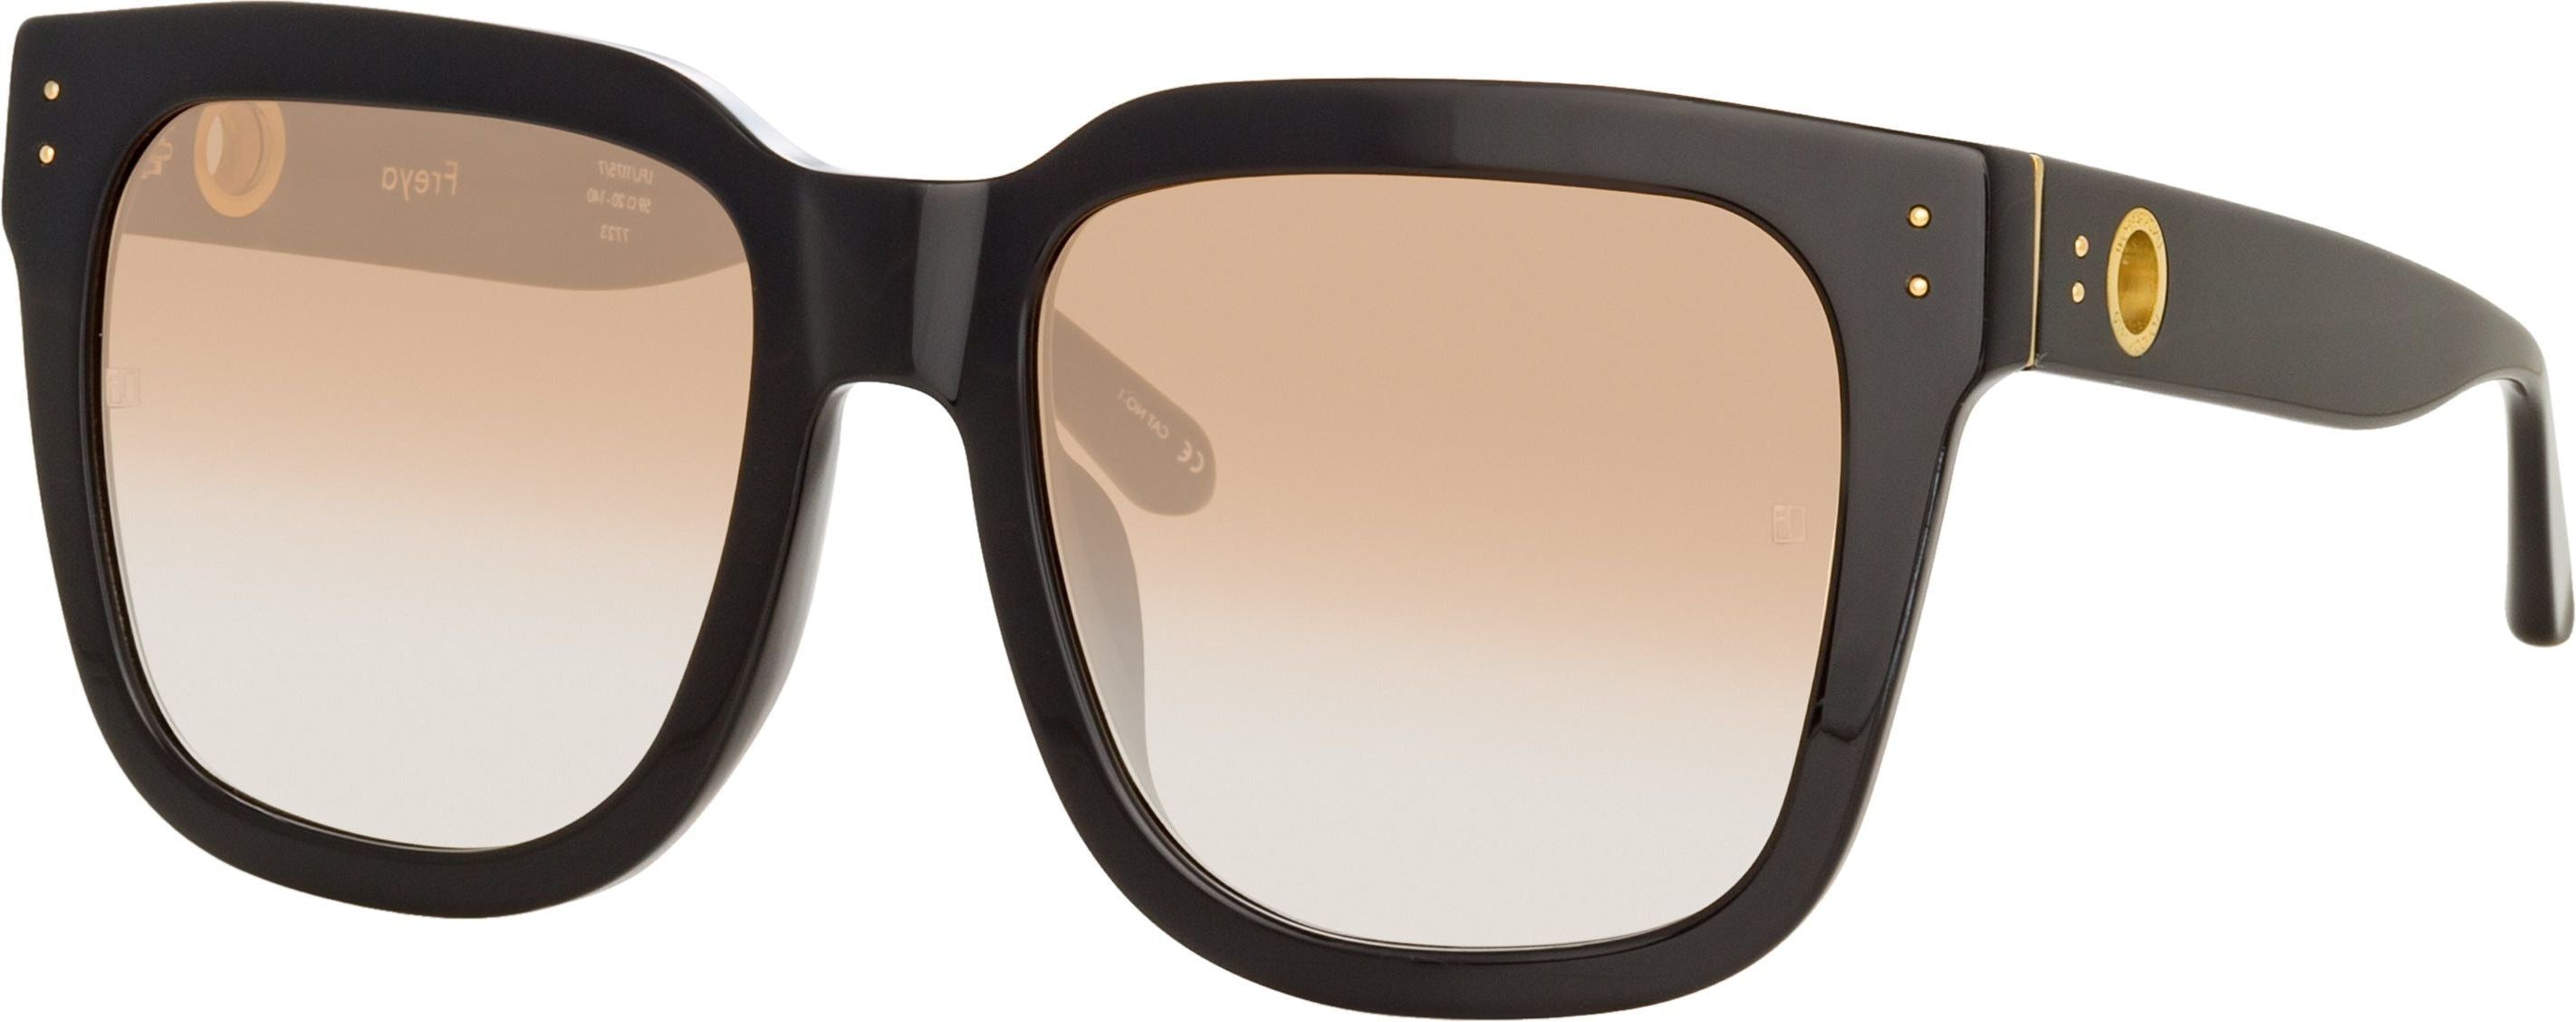 Color_LFL1175C7SUN - Freya D-Frame Sunglasses in Black and Camel